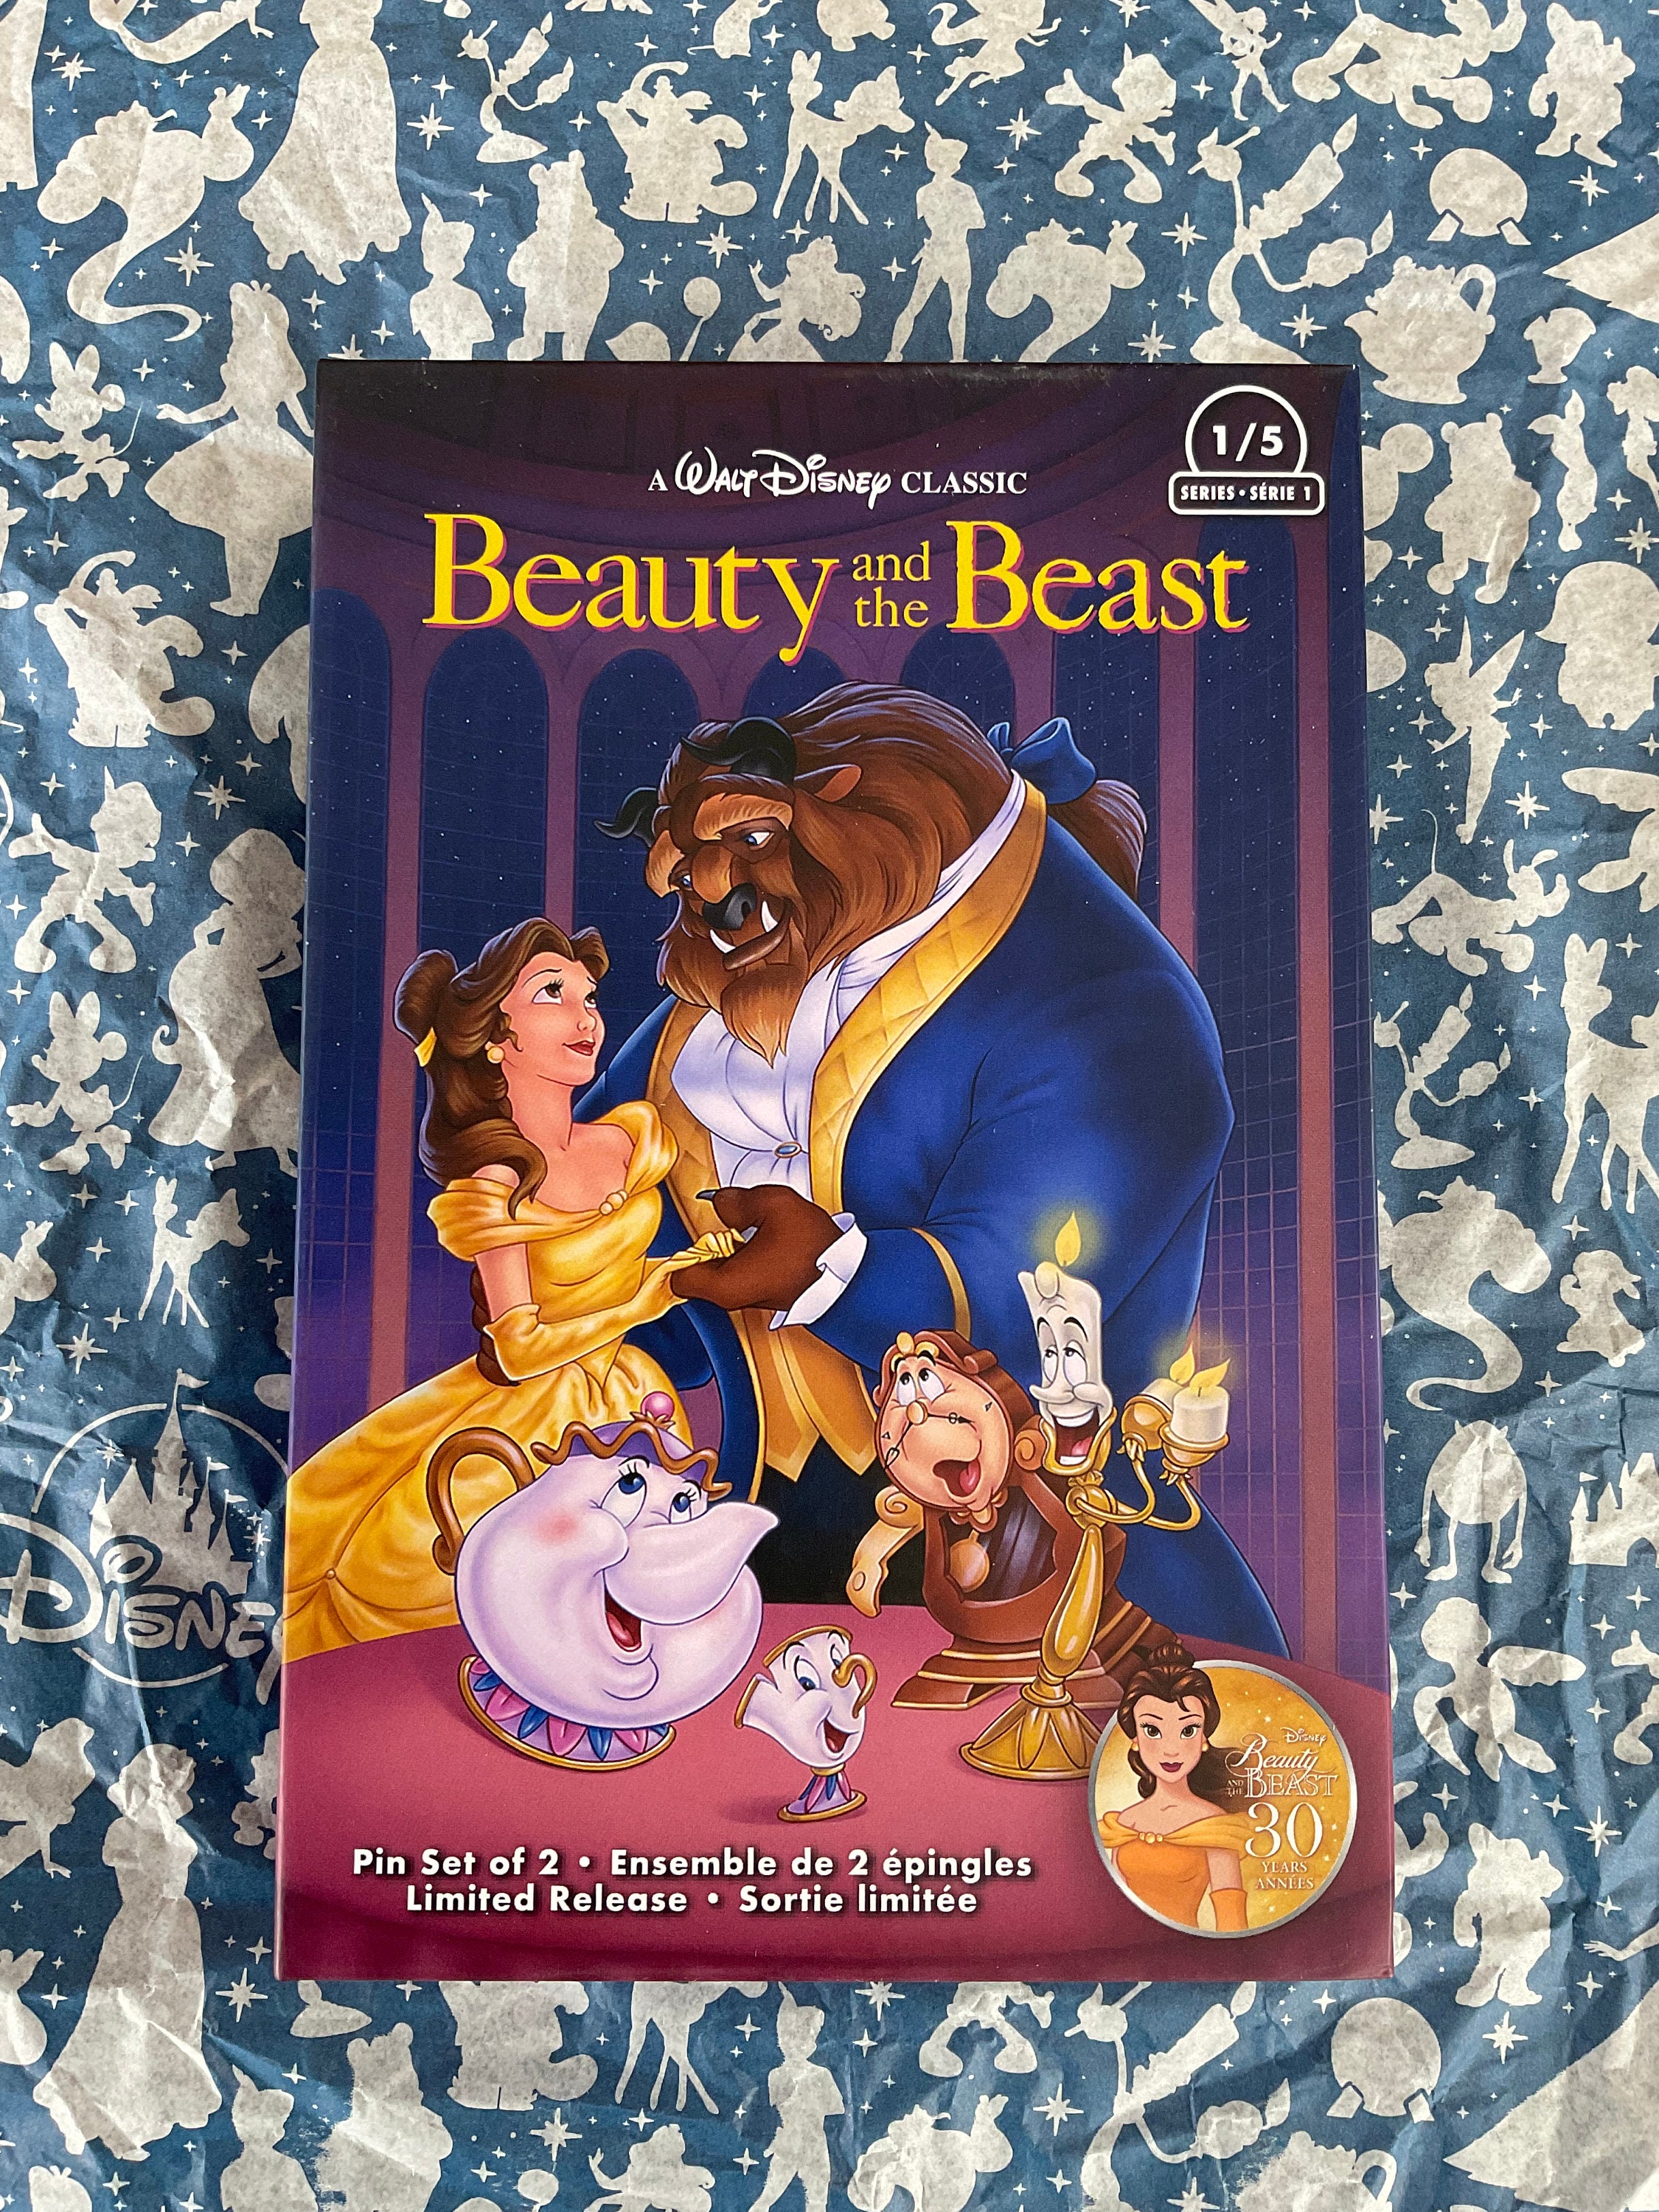 Disneys Commemorative VHS Movie Pin Set Beauty and the Beast - Etsy